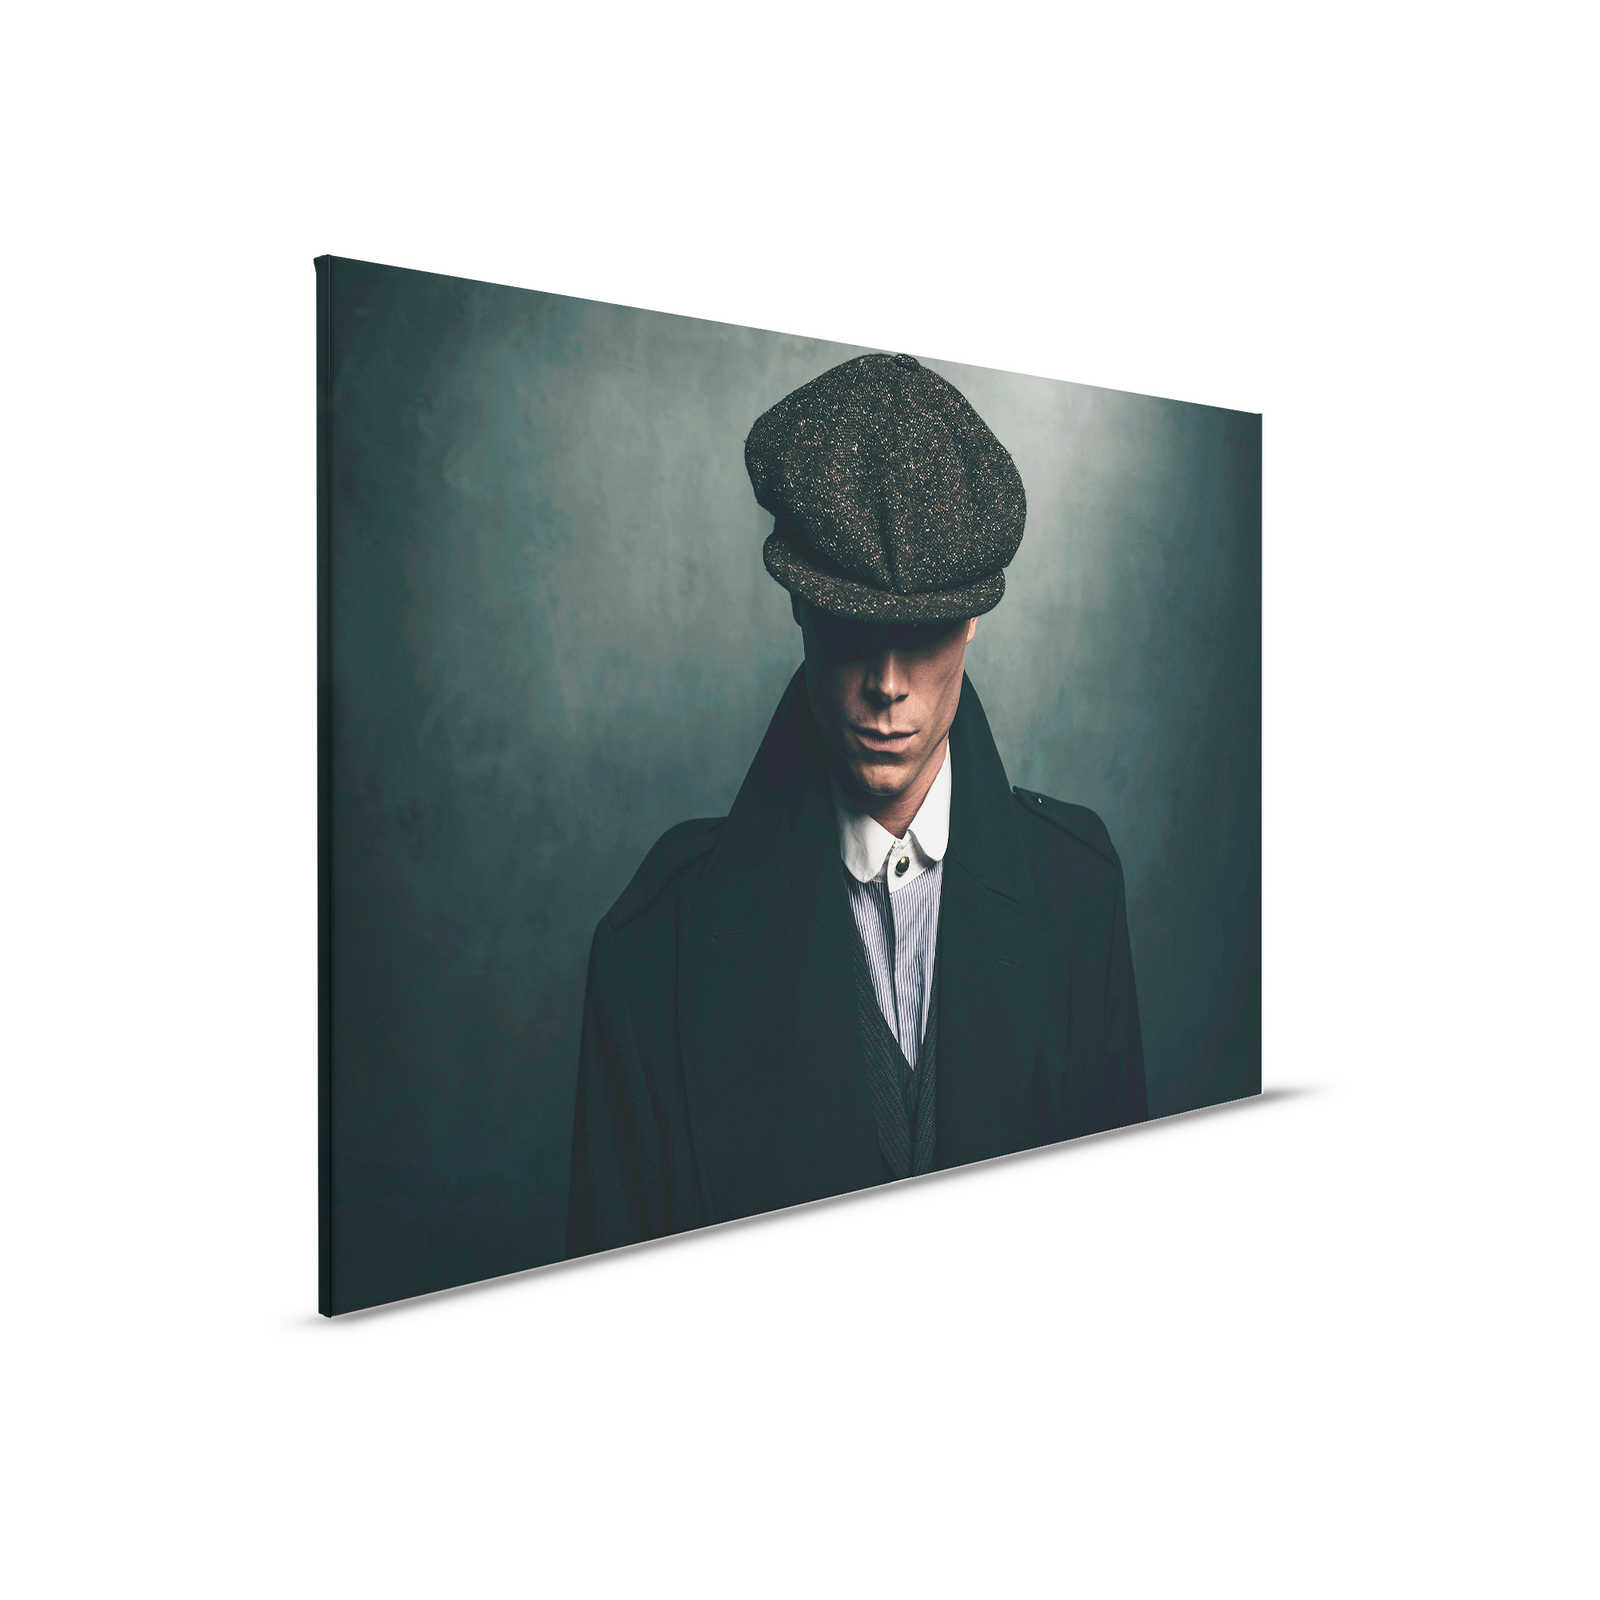         Roger 1 - Leinwandbild Gangster Portrait, Retro Style – 0,90 m x 0,60 m
    